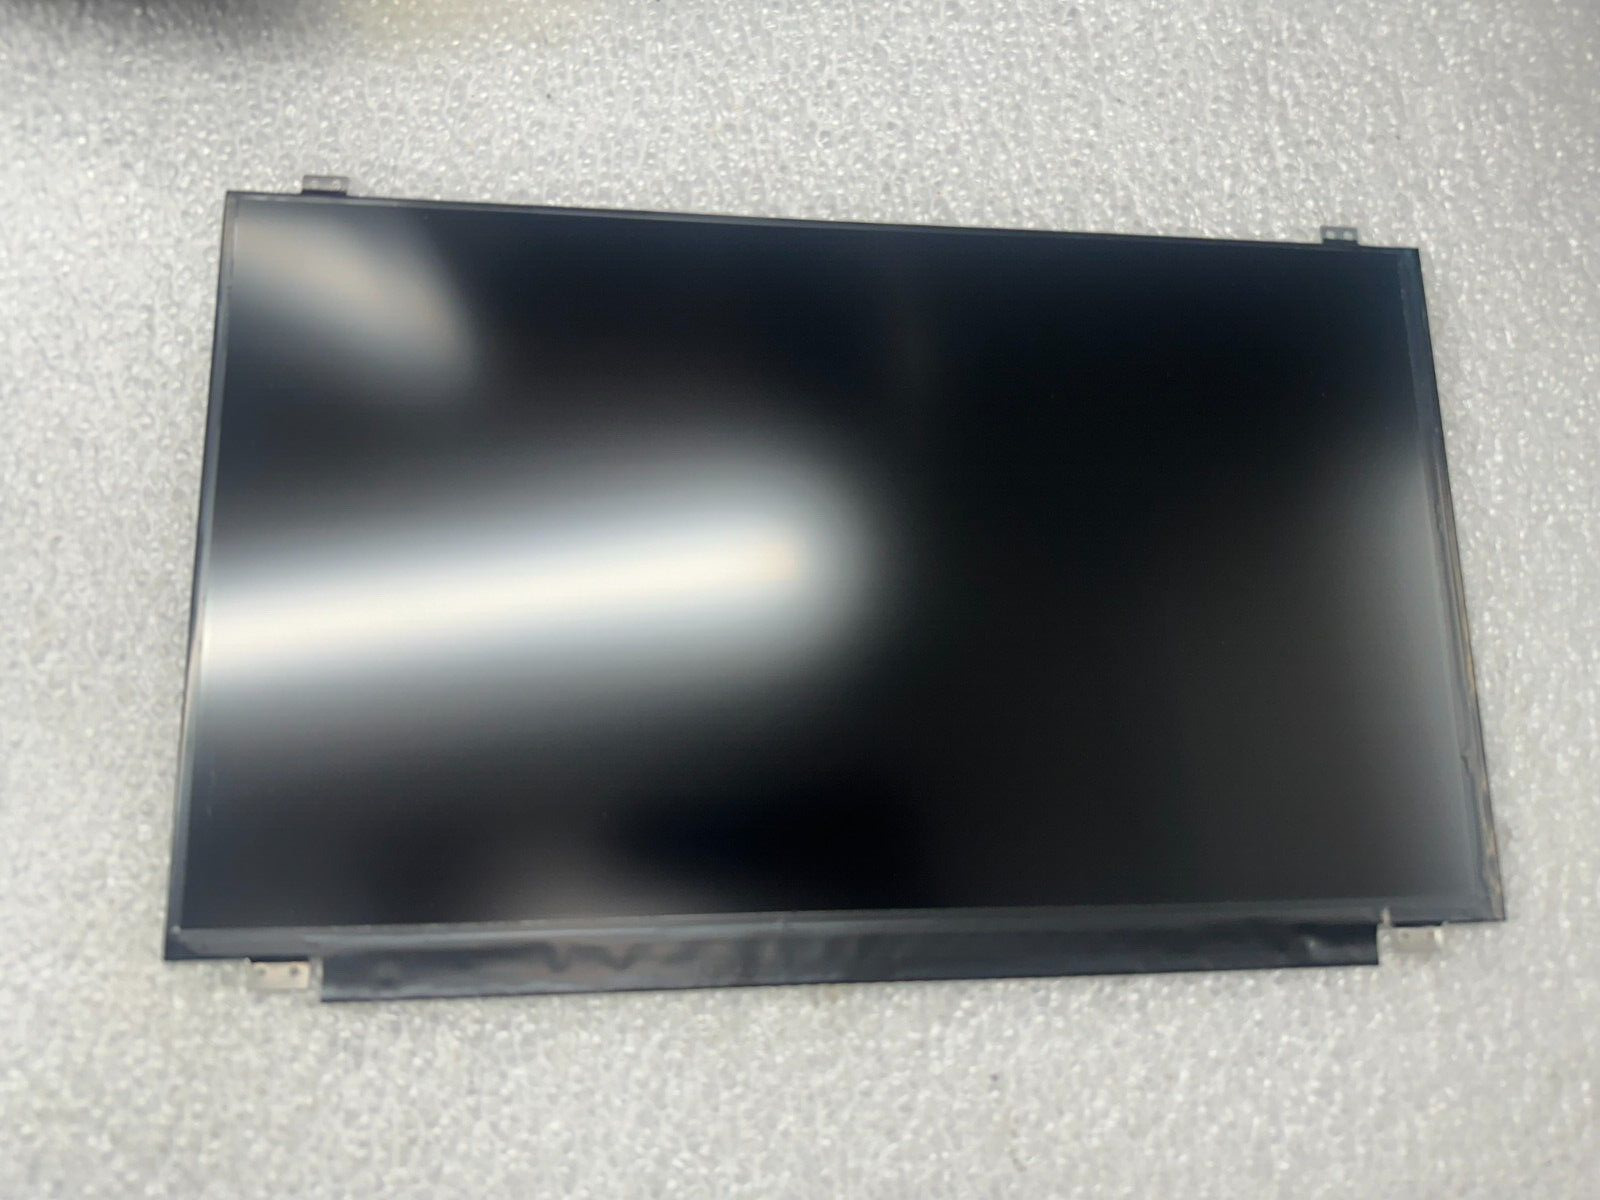 Asus Q524u 15.6 FHD internal LCD Screen display panel nv156fhm-n43